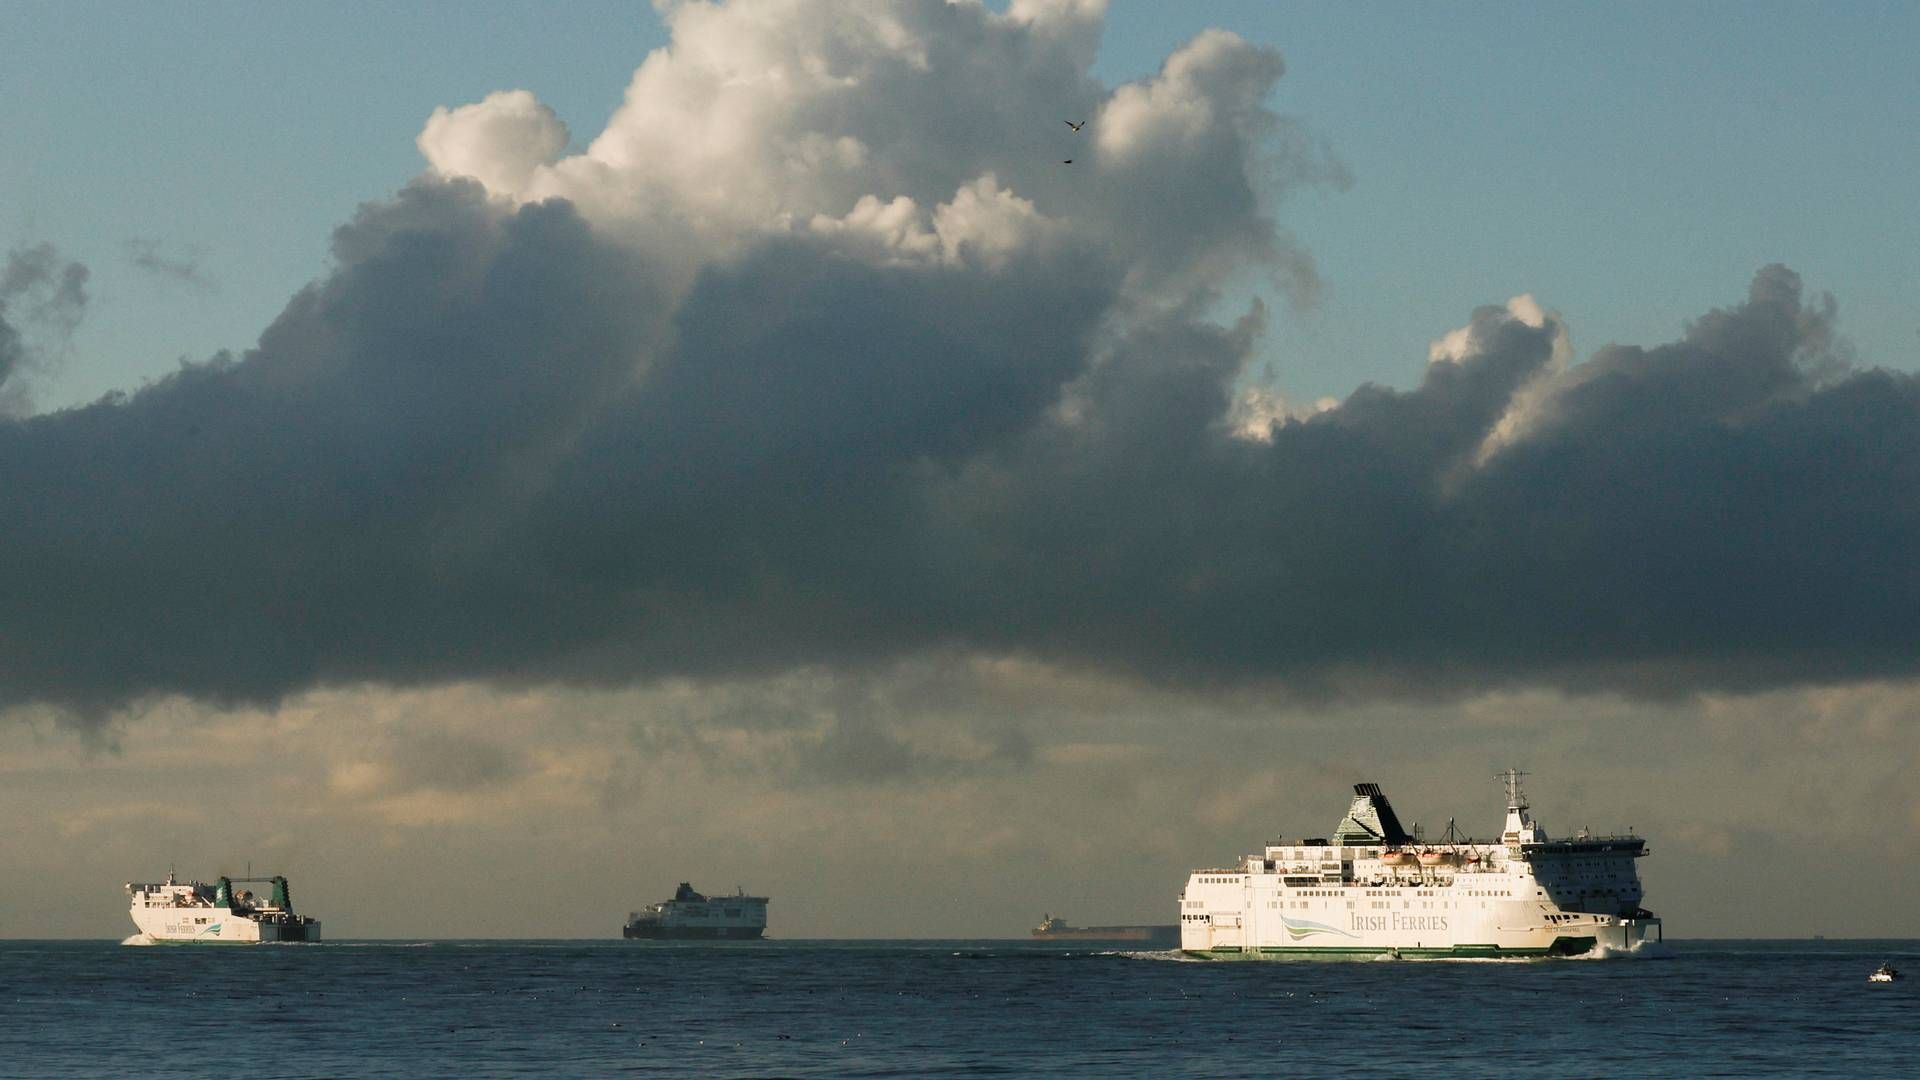 To færger fra Irish Ferries sejler forbi stranden i Calais. | Foto: Pascal Rossignol/Reuters/Ritzau Scanpix